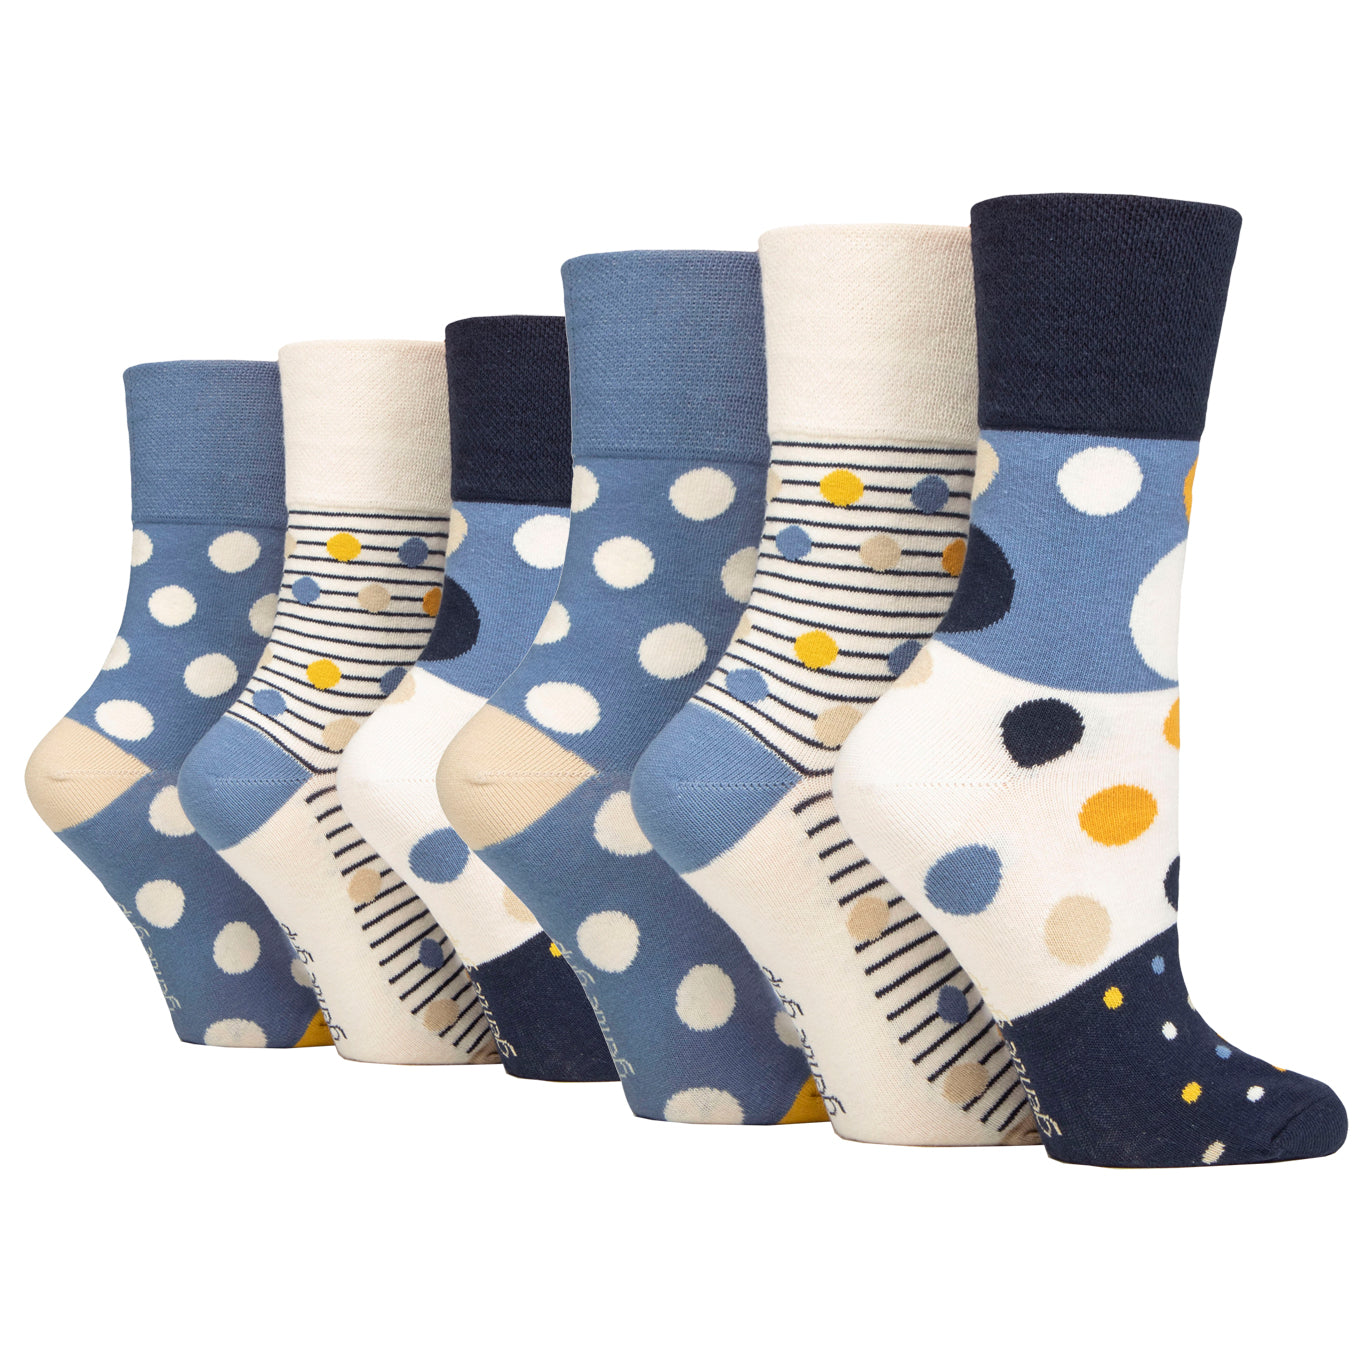 6 Pairs Ladies Gentle Grip Cotton Socks - Summer Sports